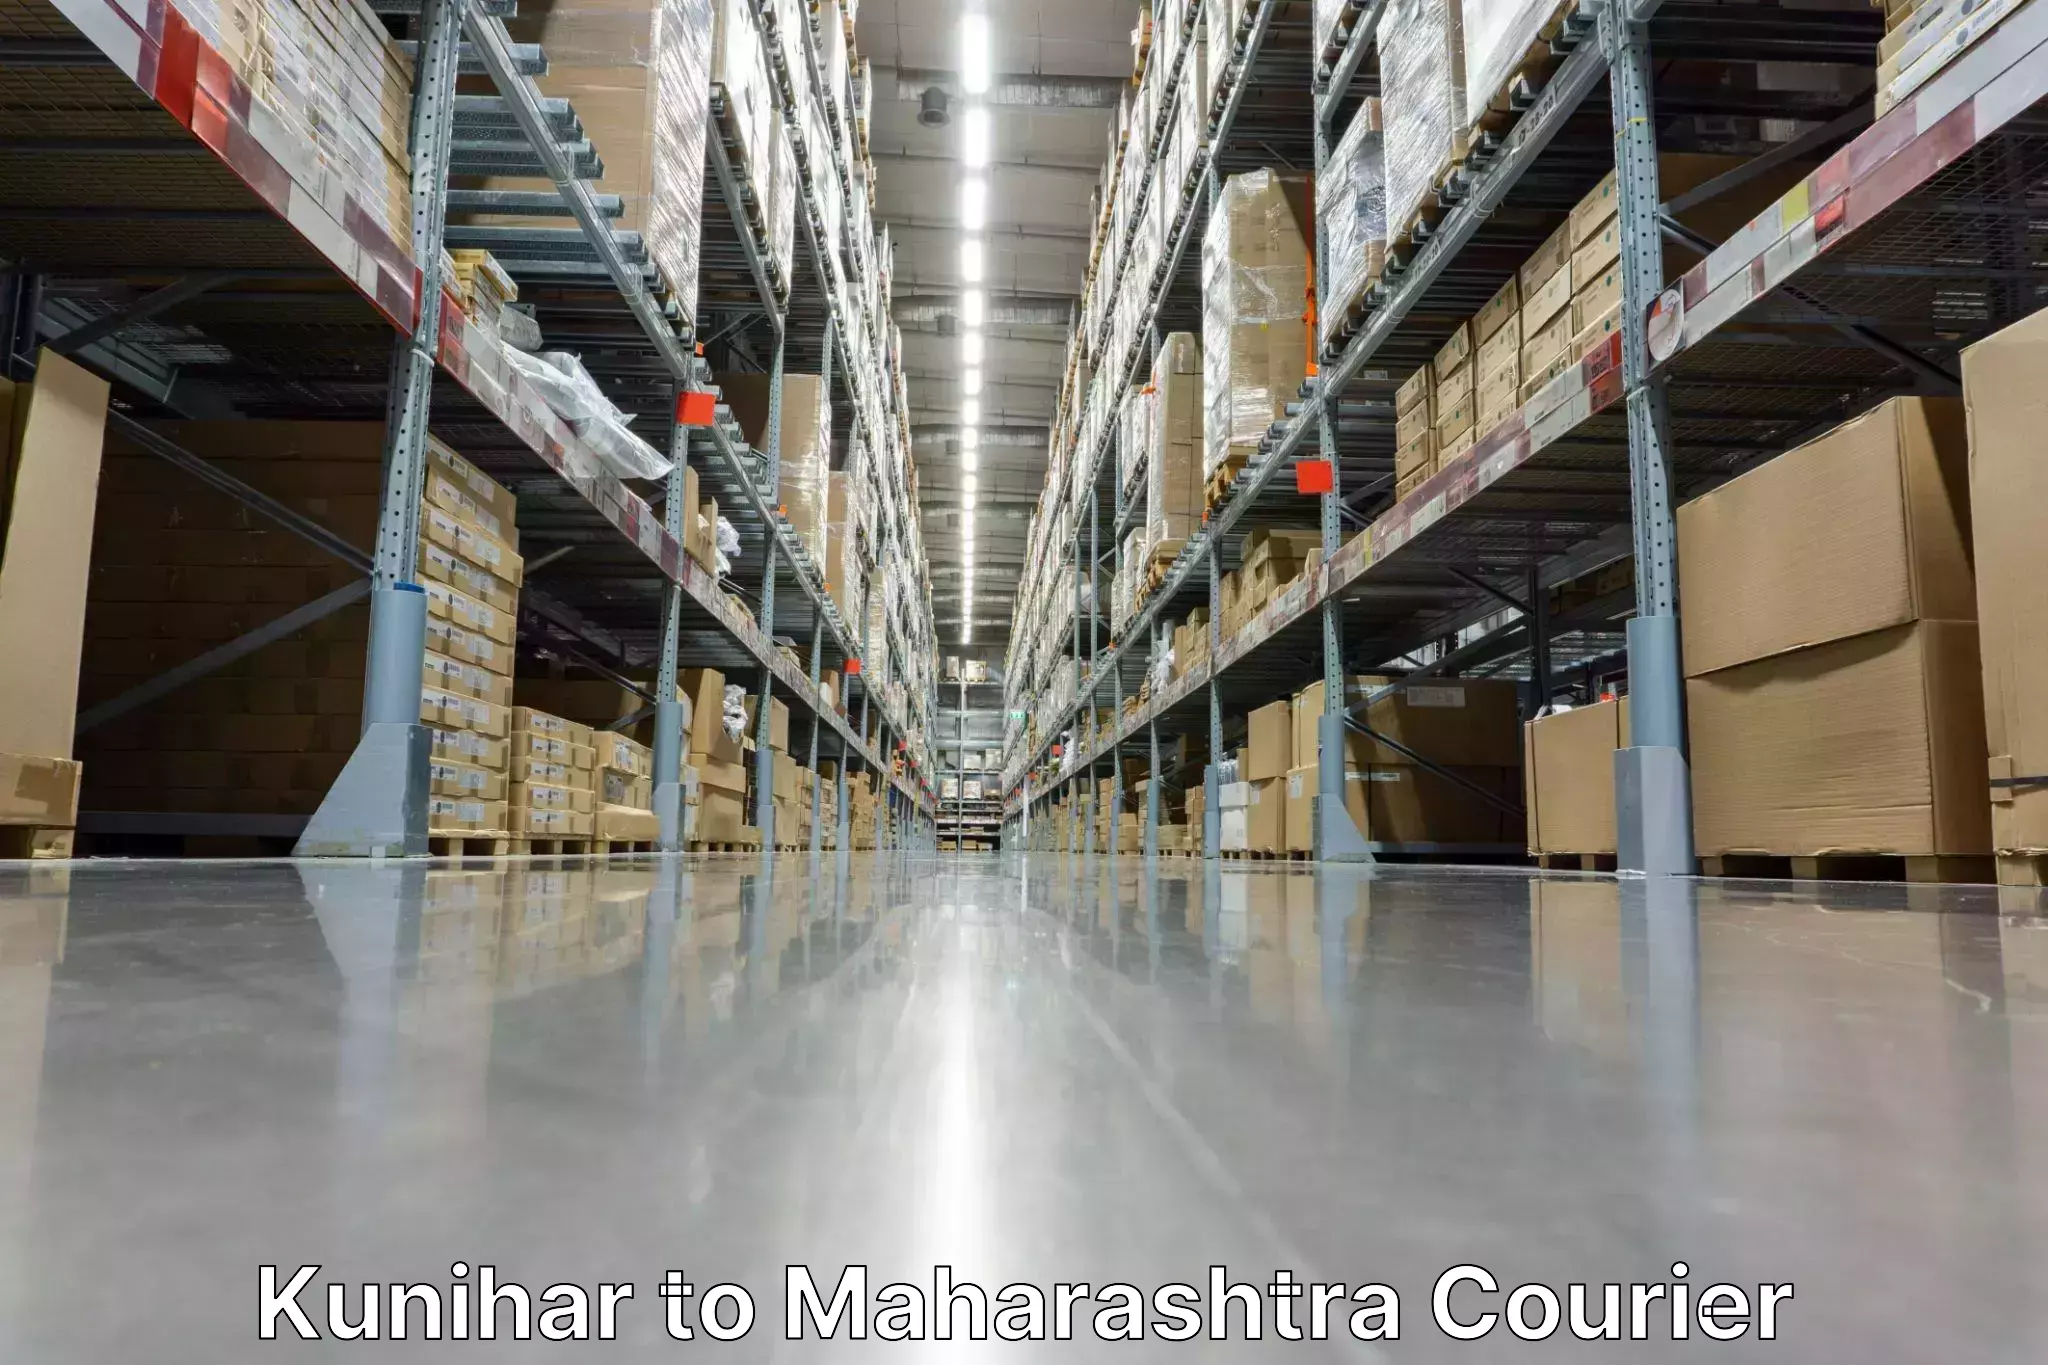 Customer-centric shipping Kunihar to Pune